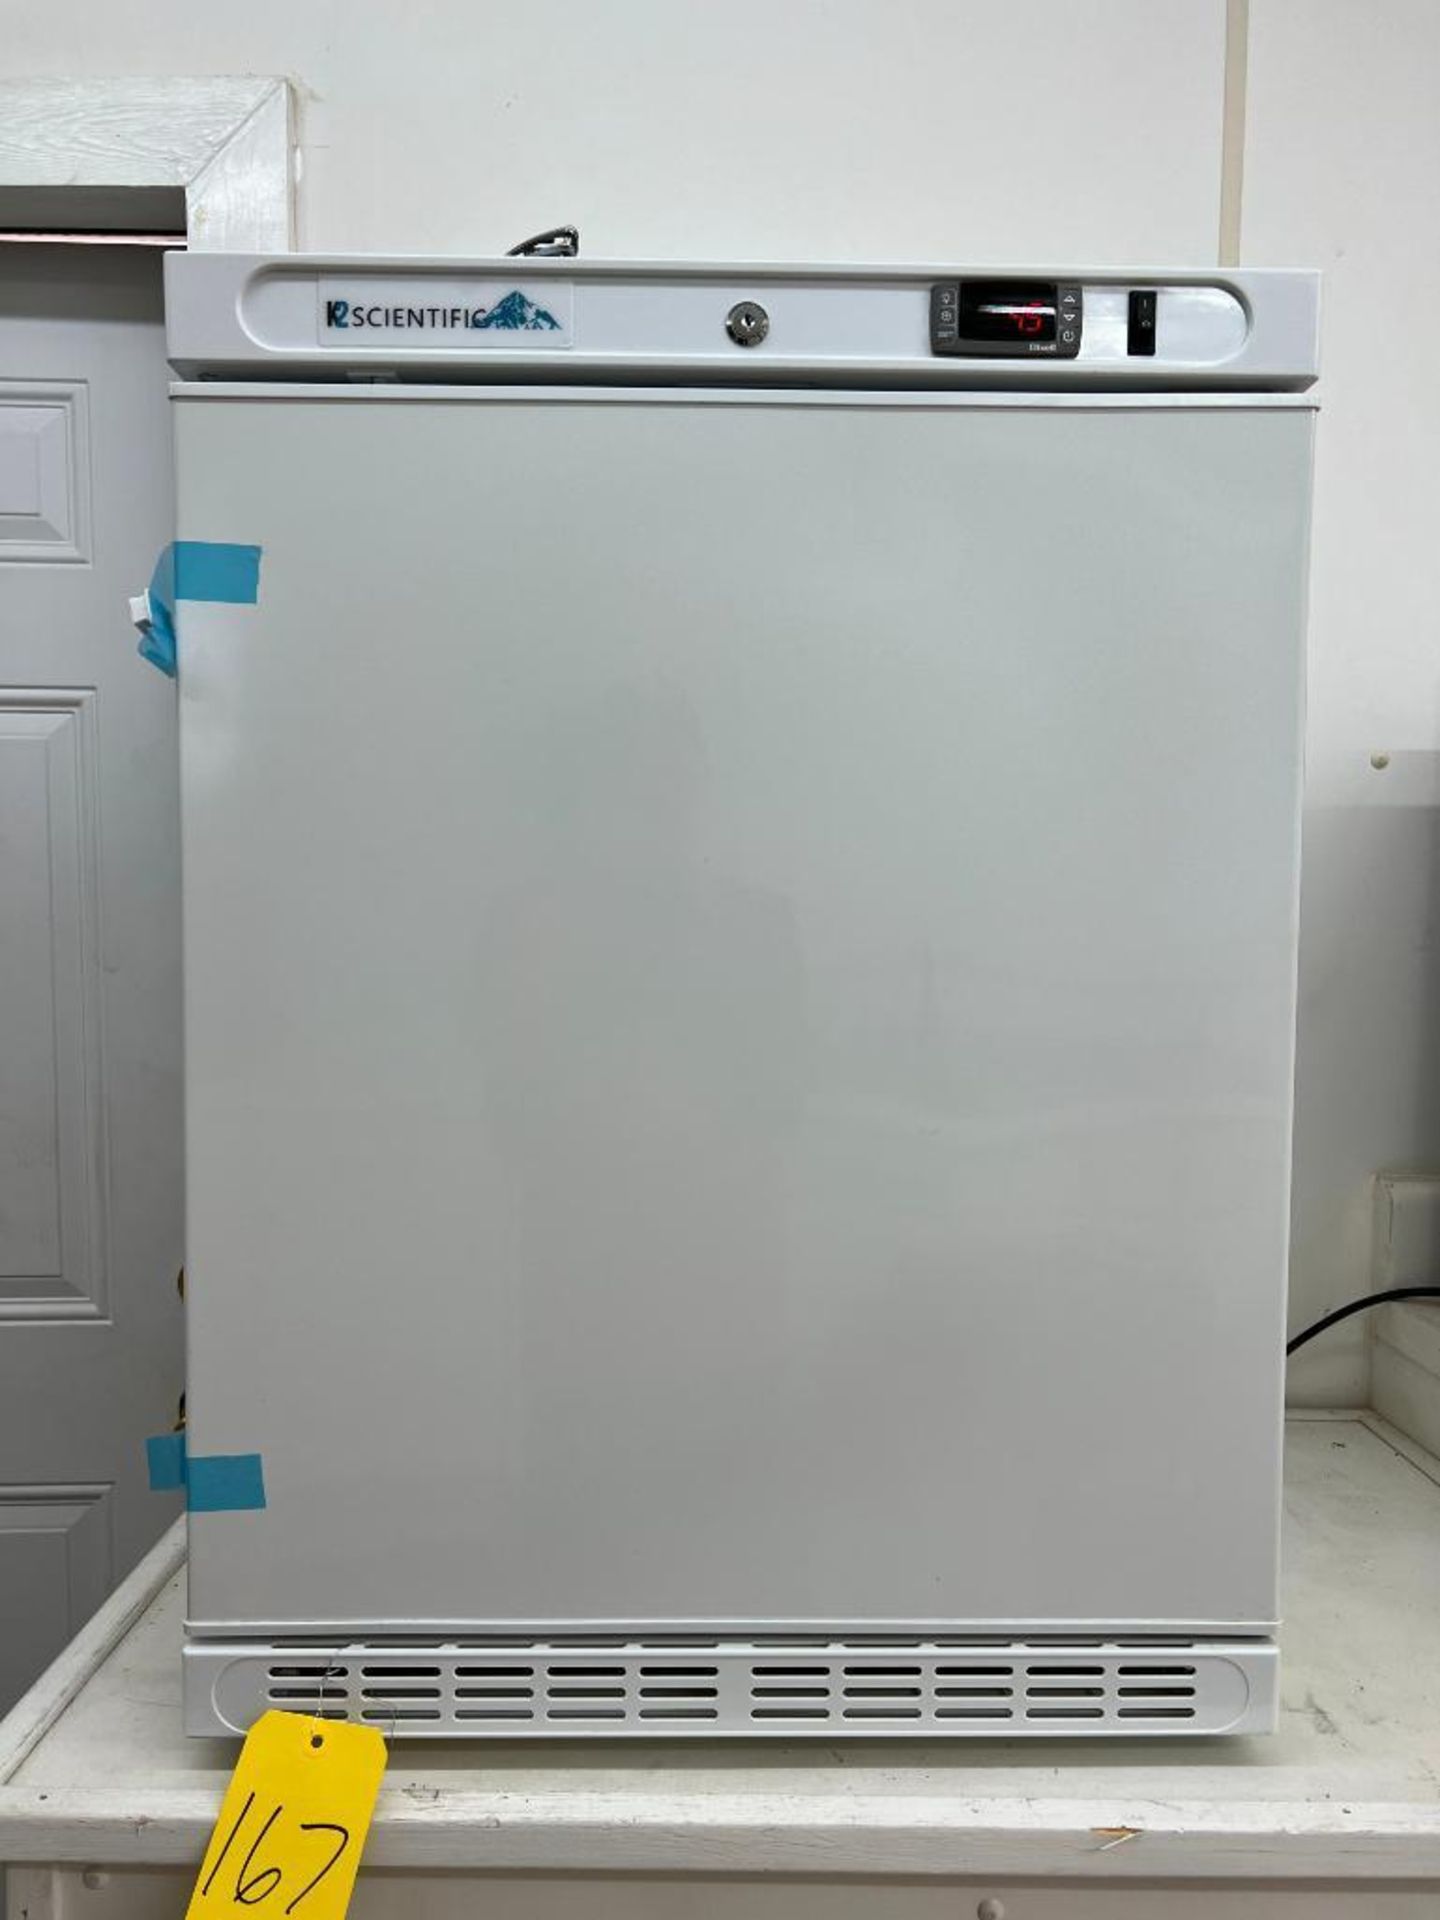 NEW K2 Scientific Lab Refrigerator - Image 2 of 4